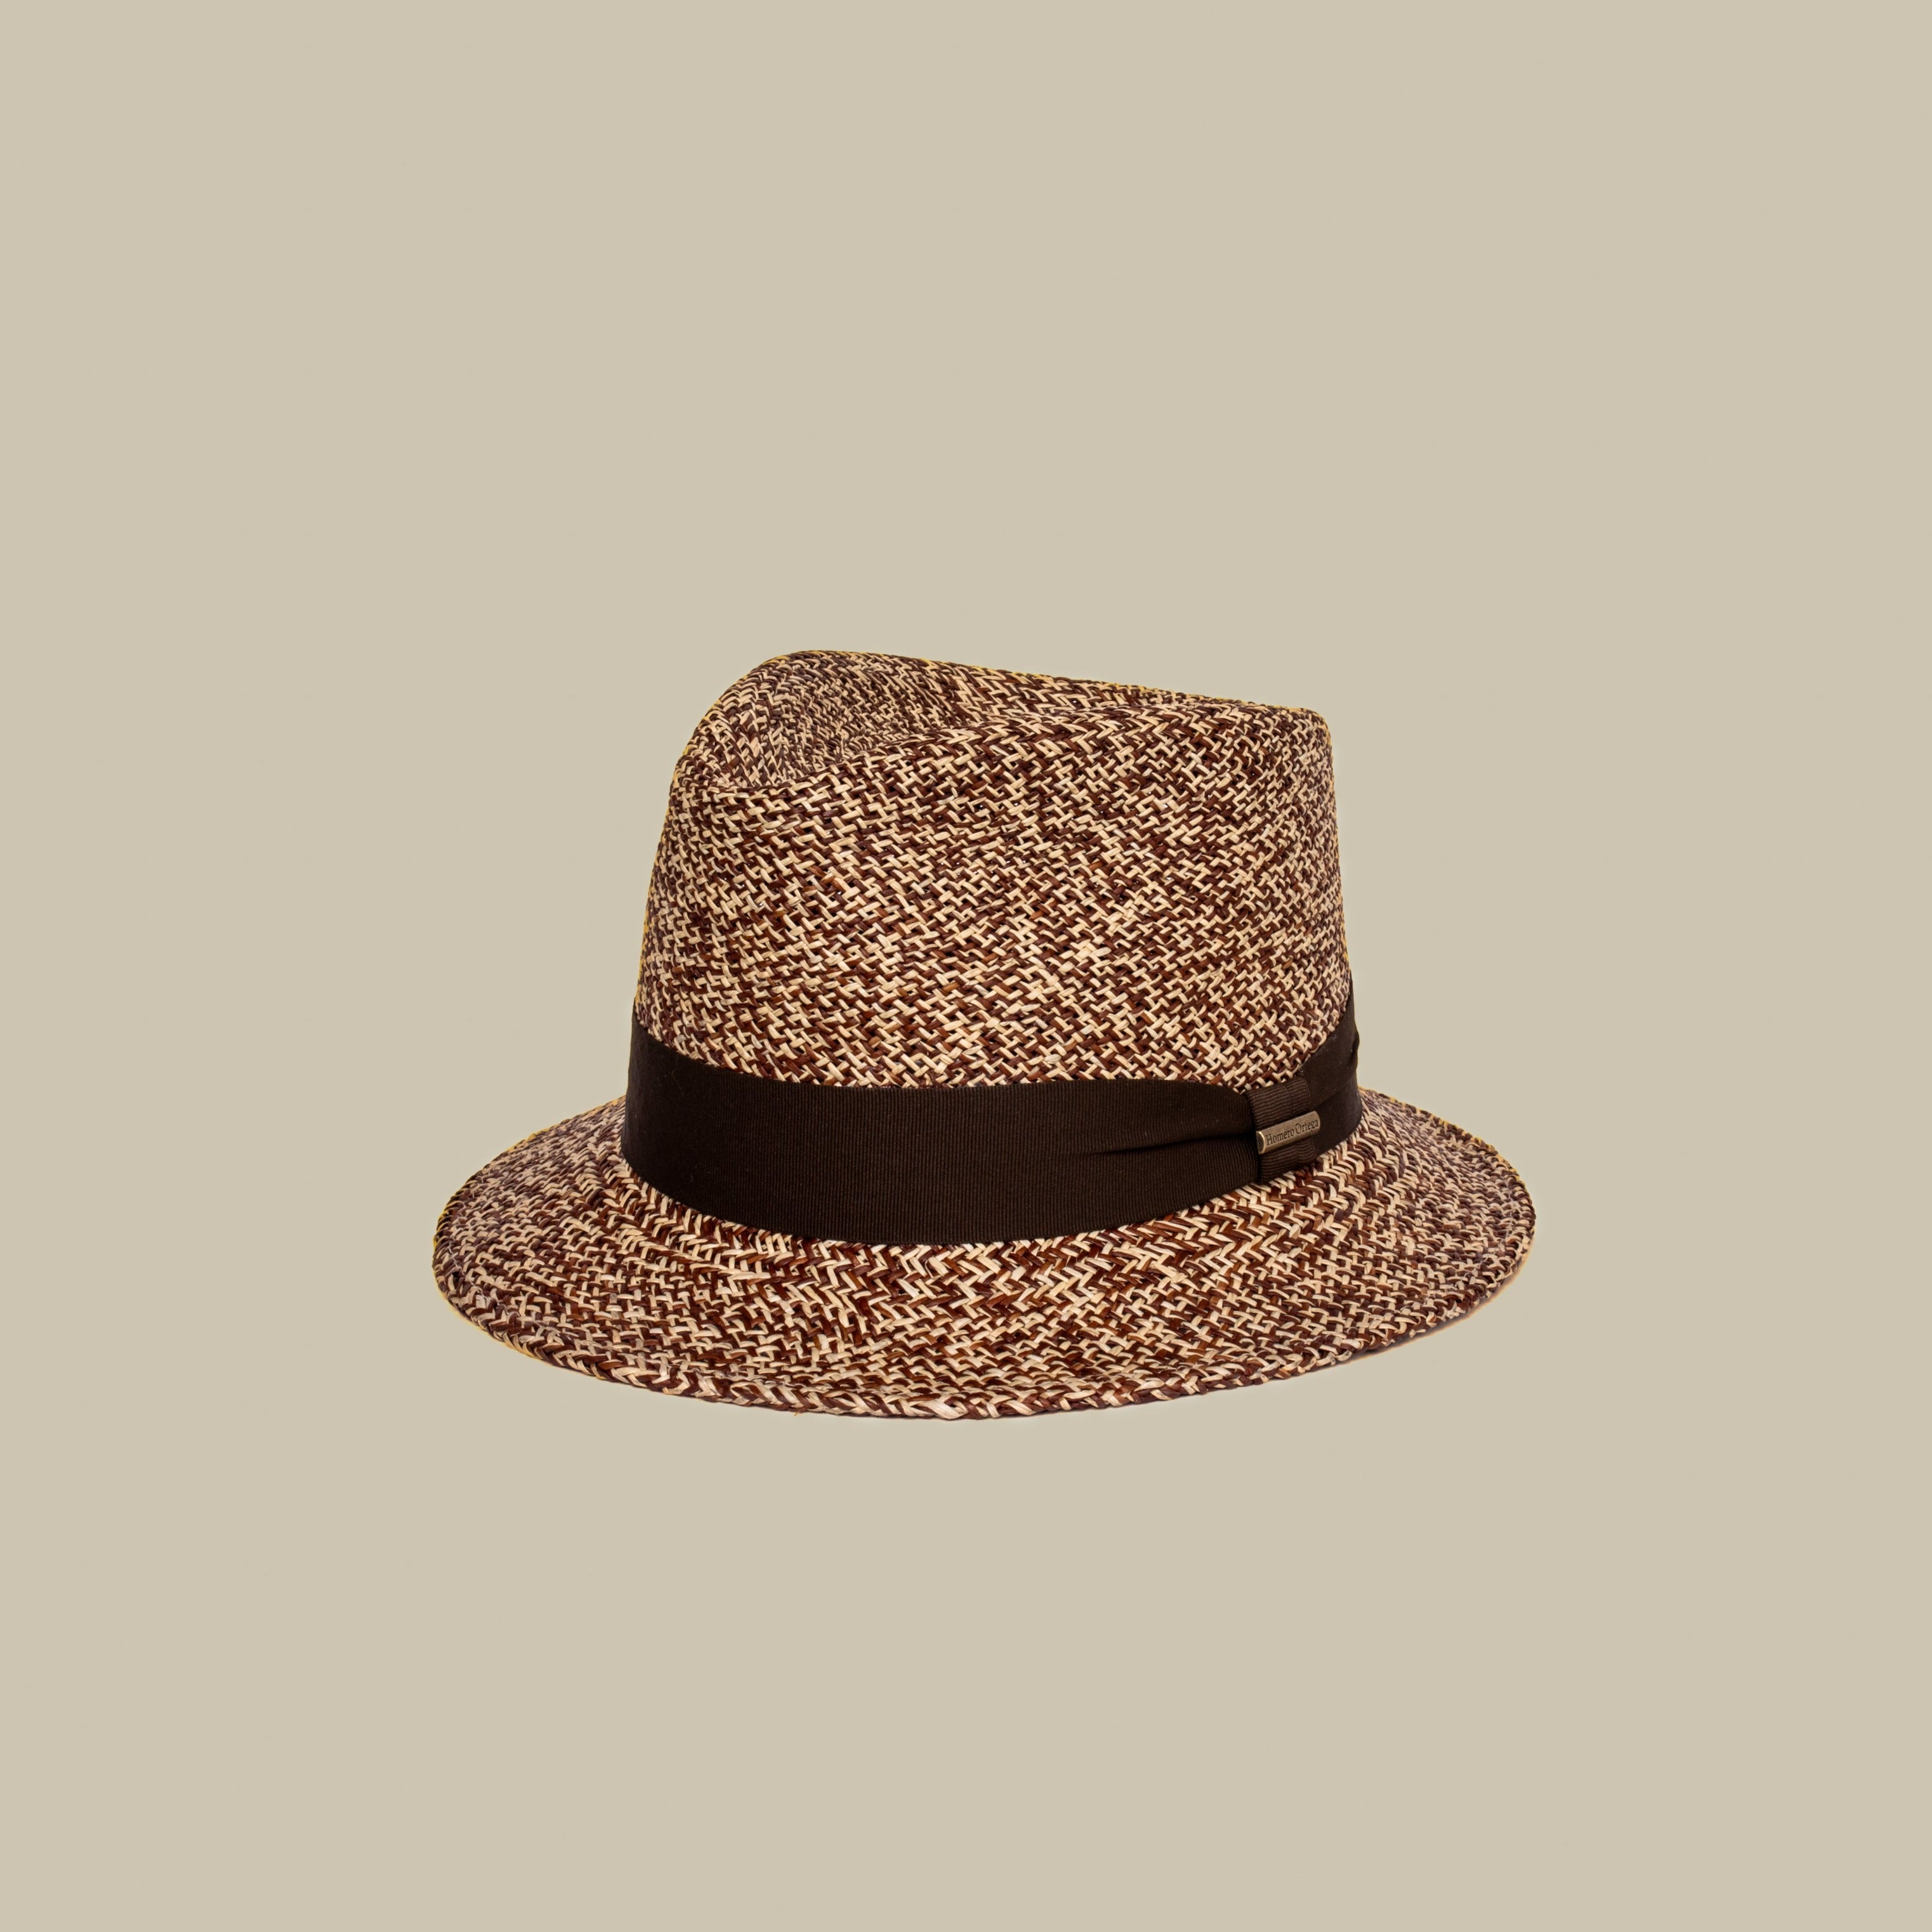 Buy Panama Hats for men melbourne